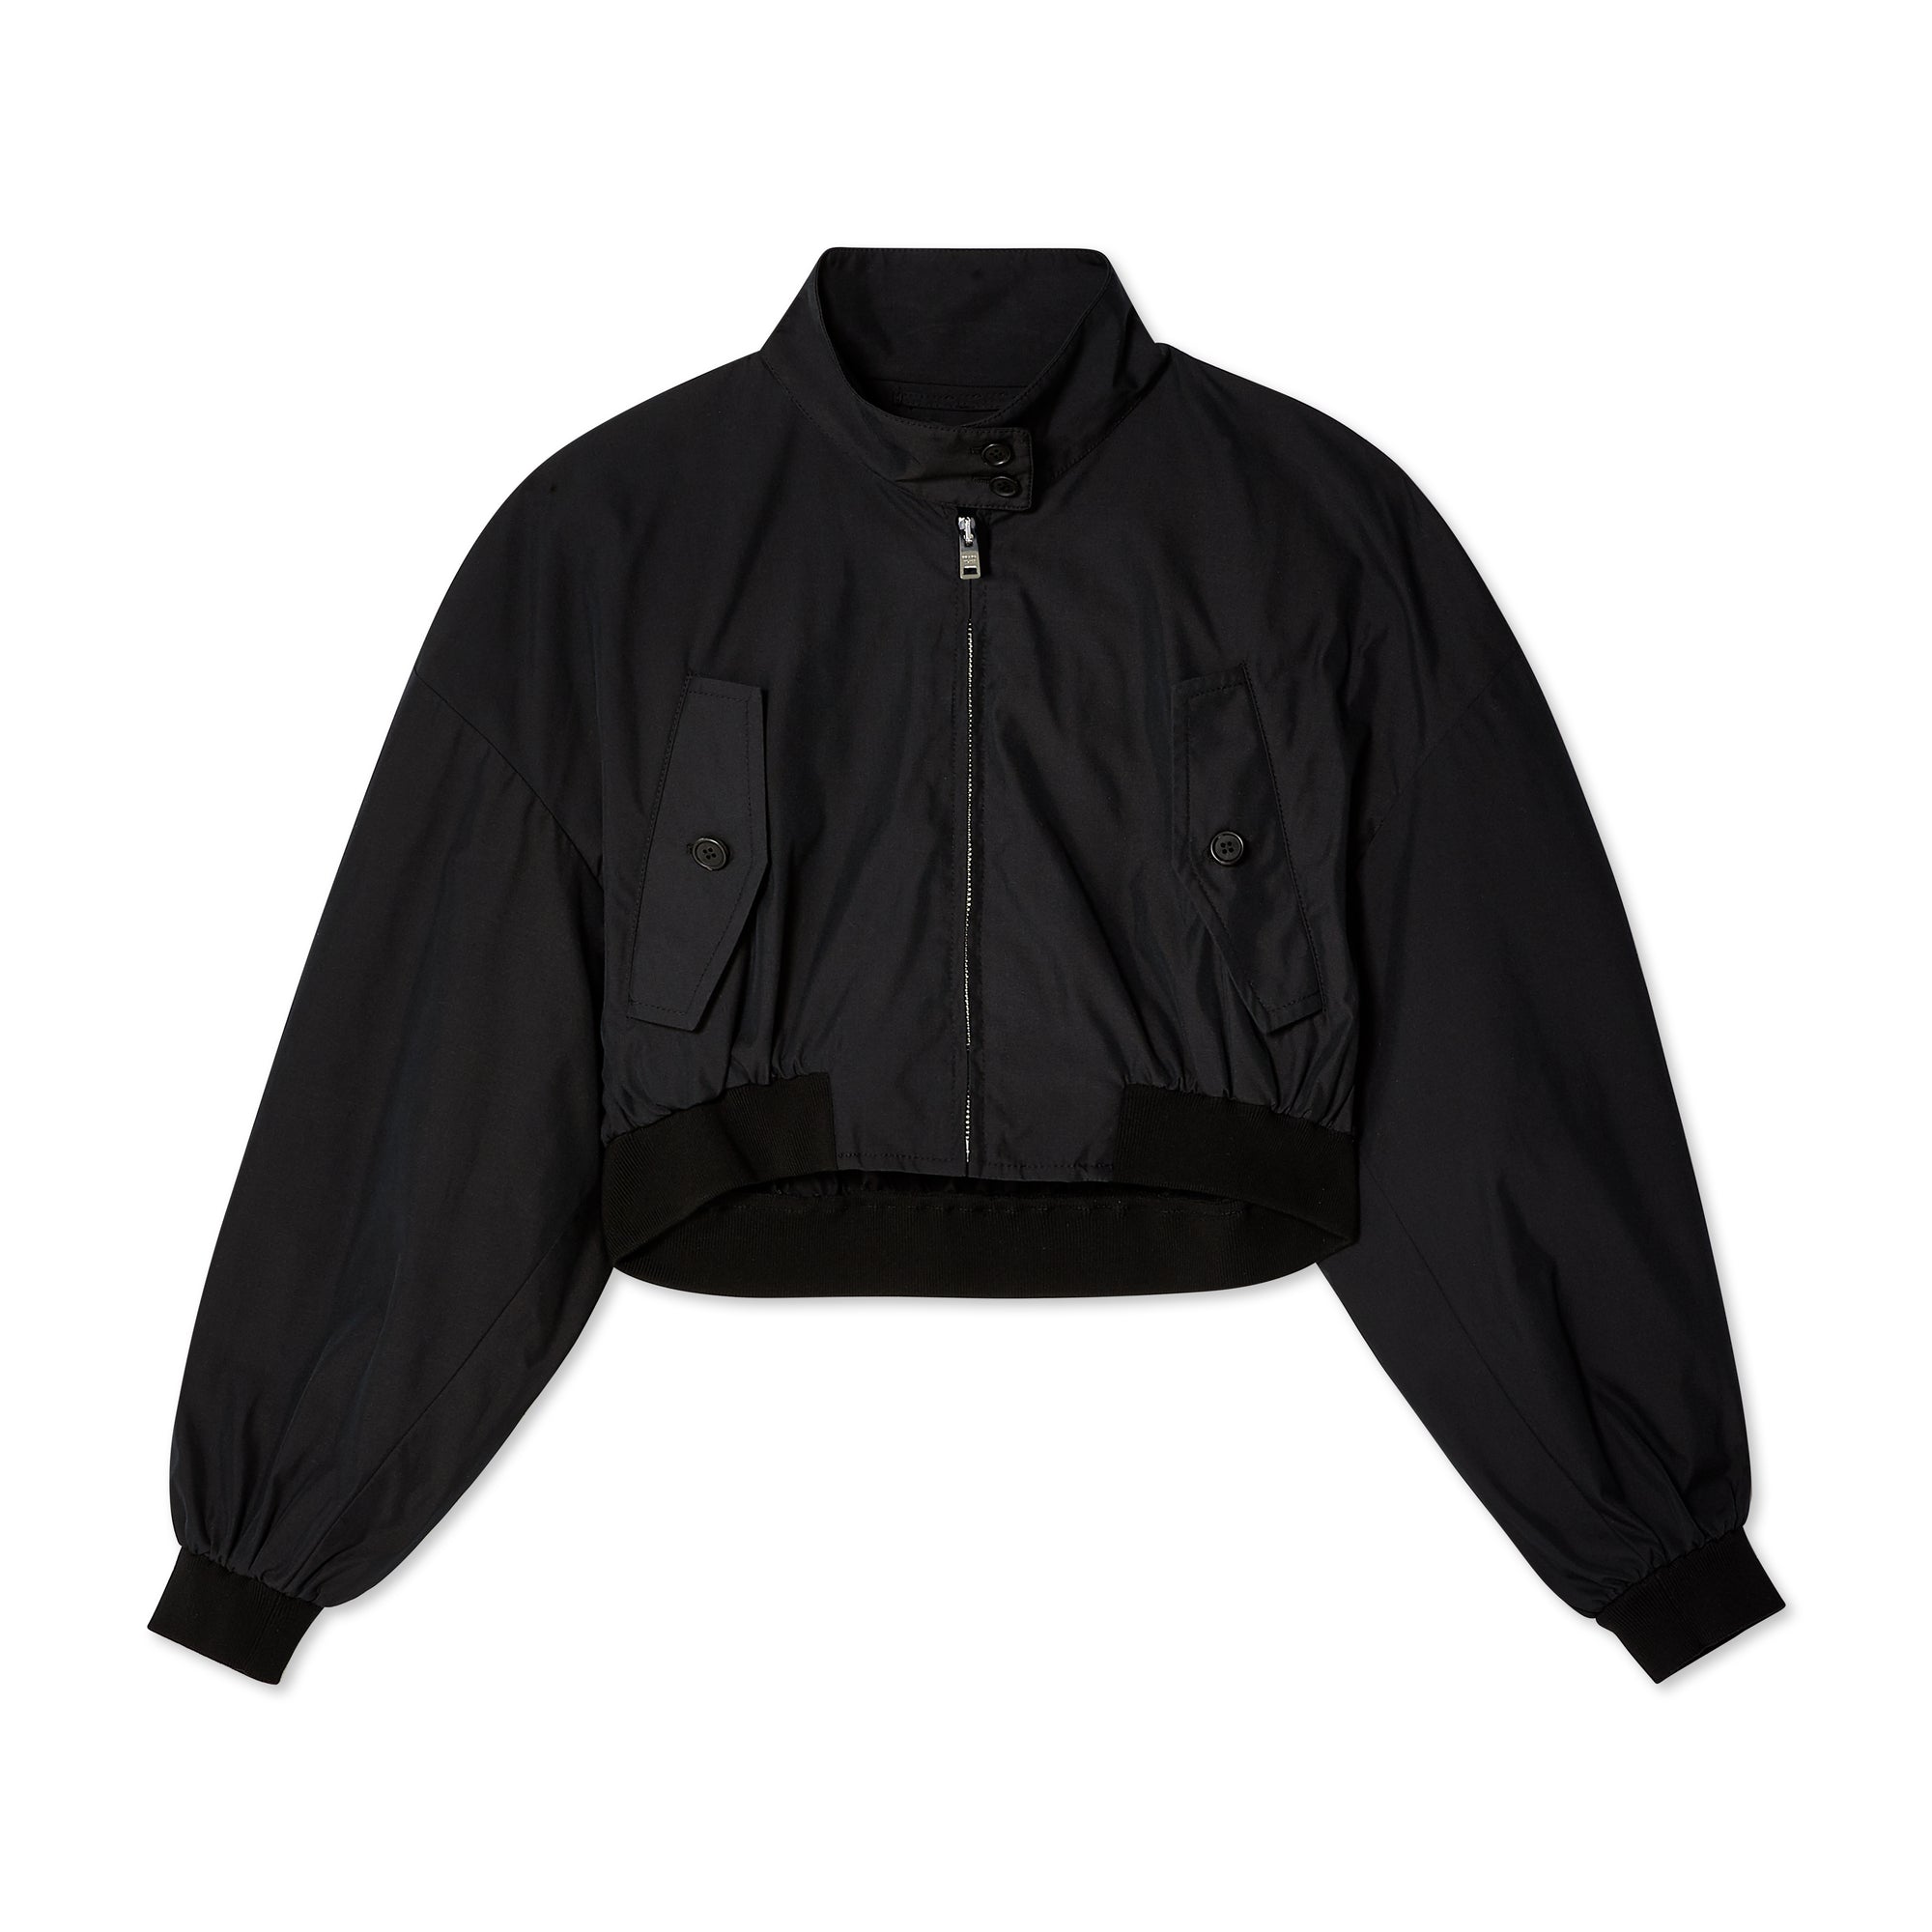 Prada - Women's Cotton Cropped Jacket - (Black) view 1